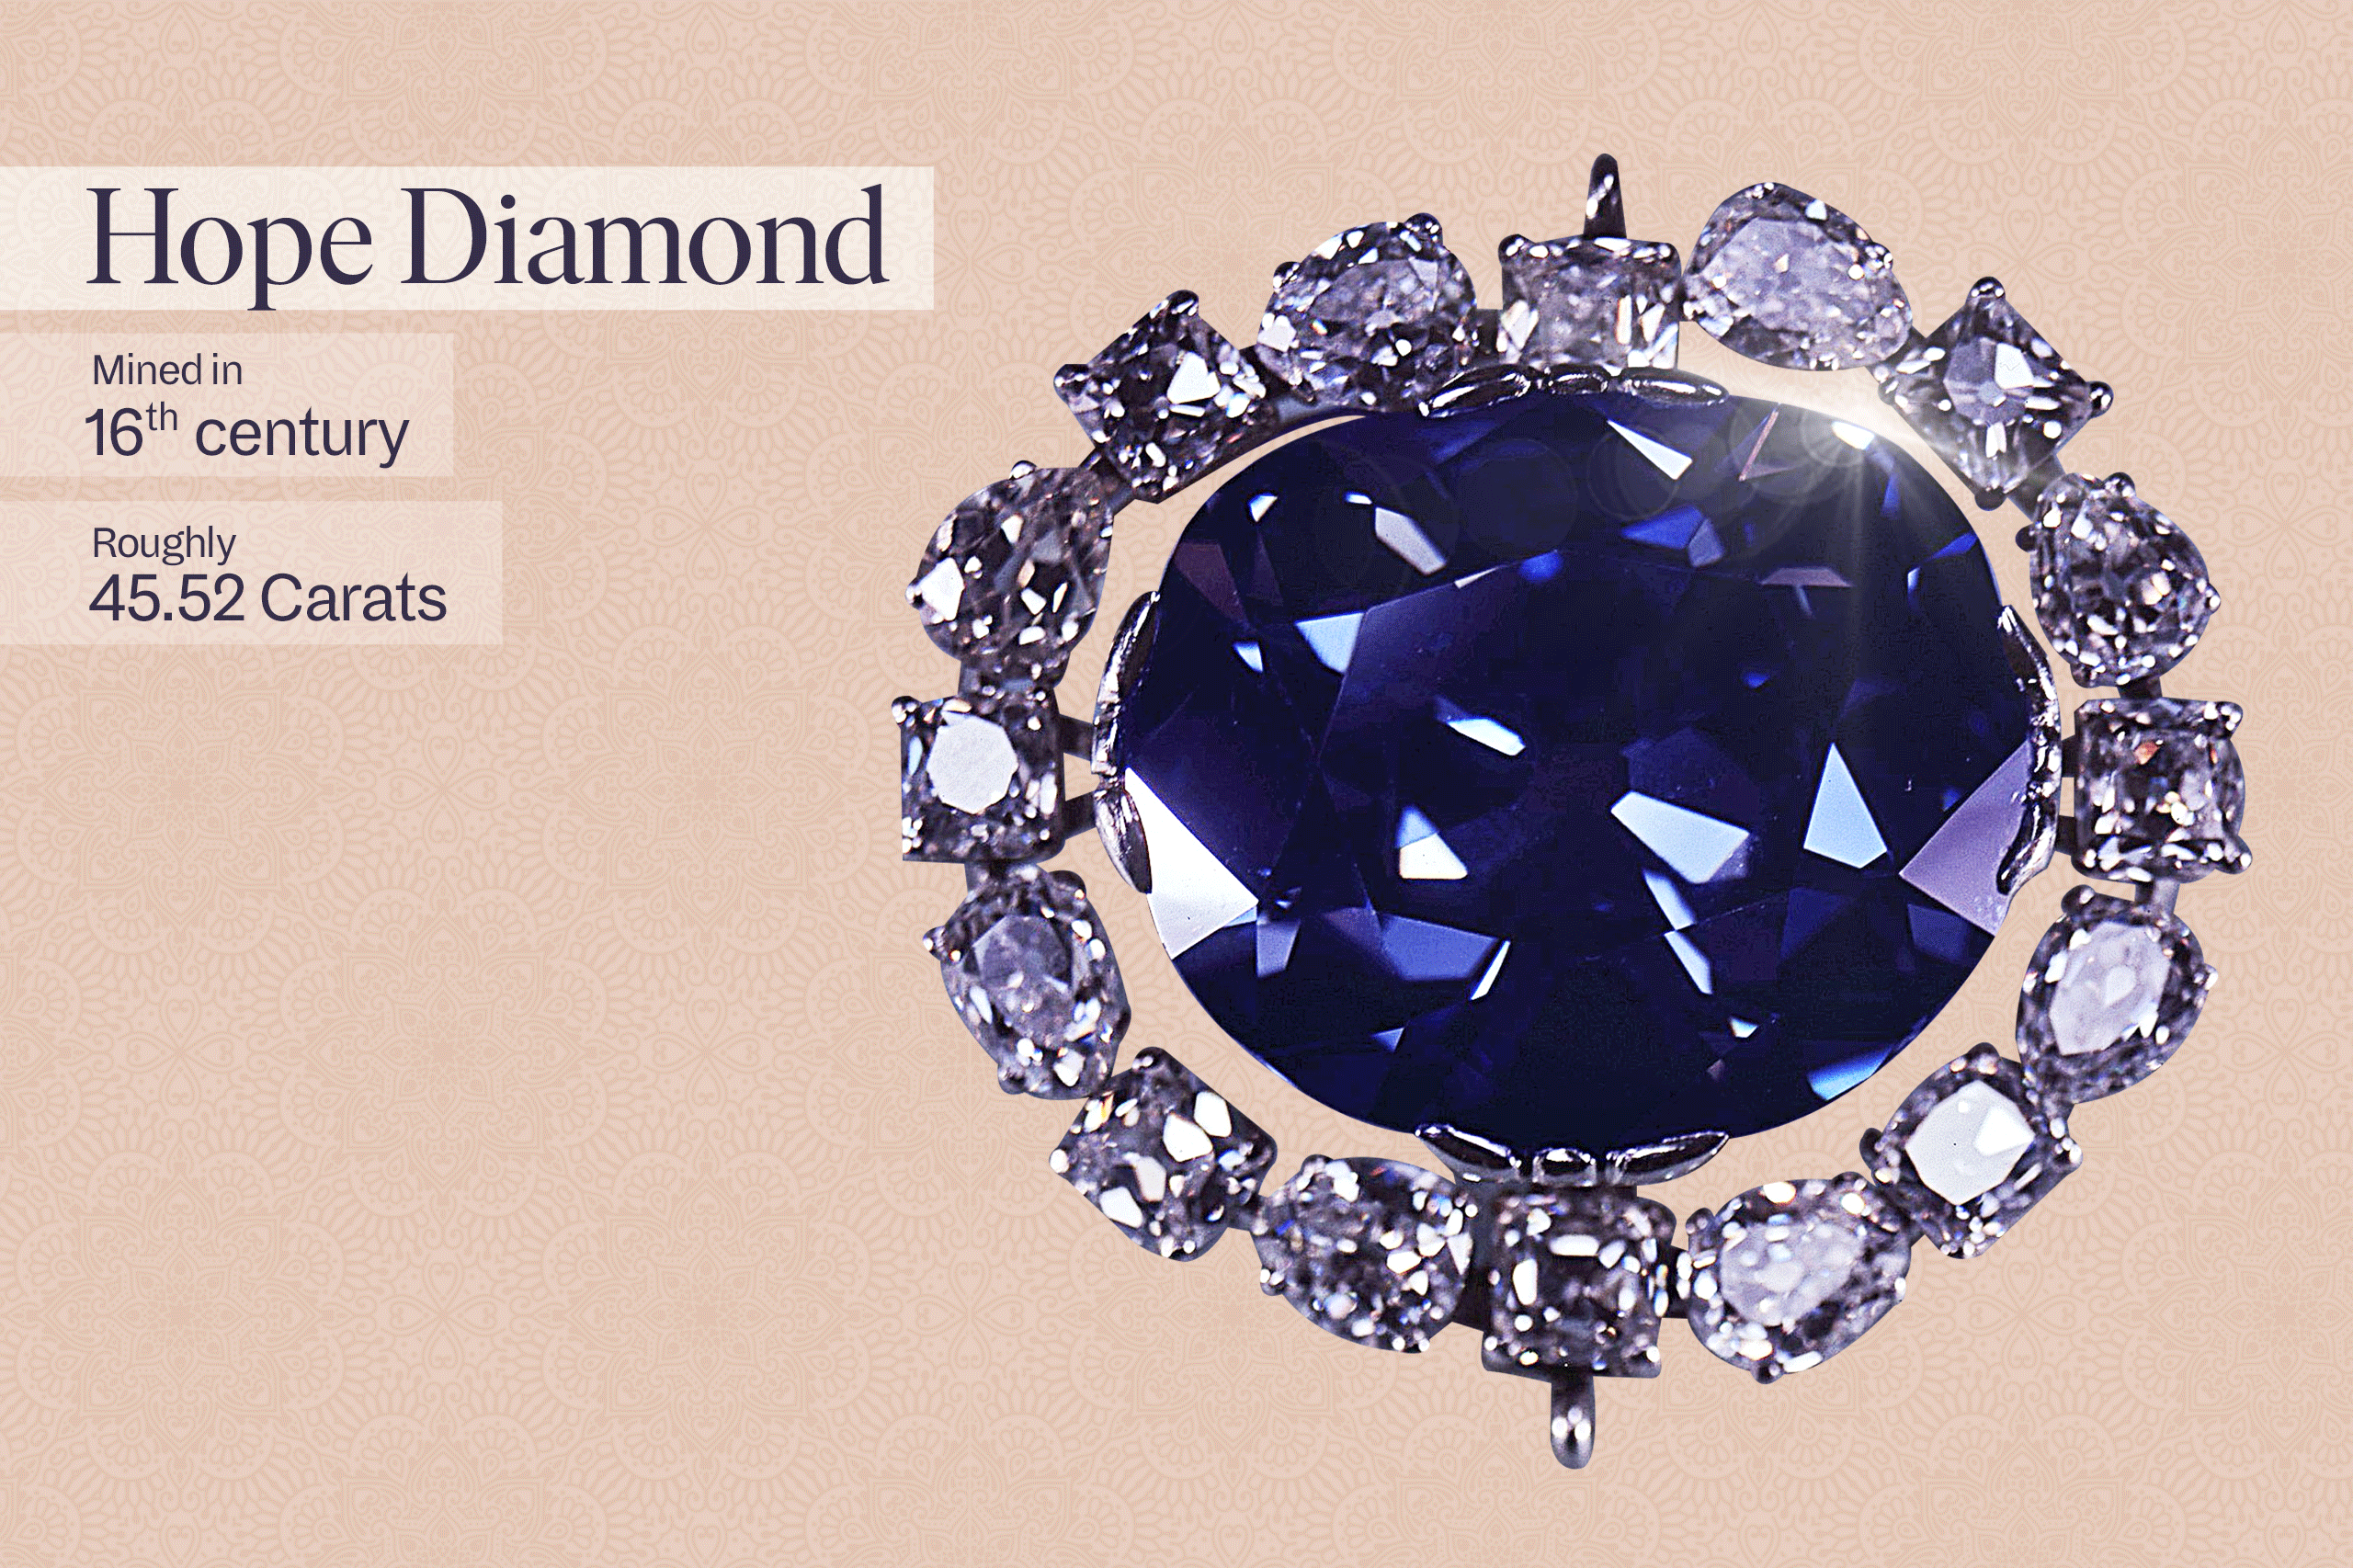 Hope Diamond: 16th Century Mined Gem, Approximately 45.52 Carats